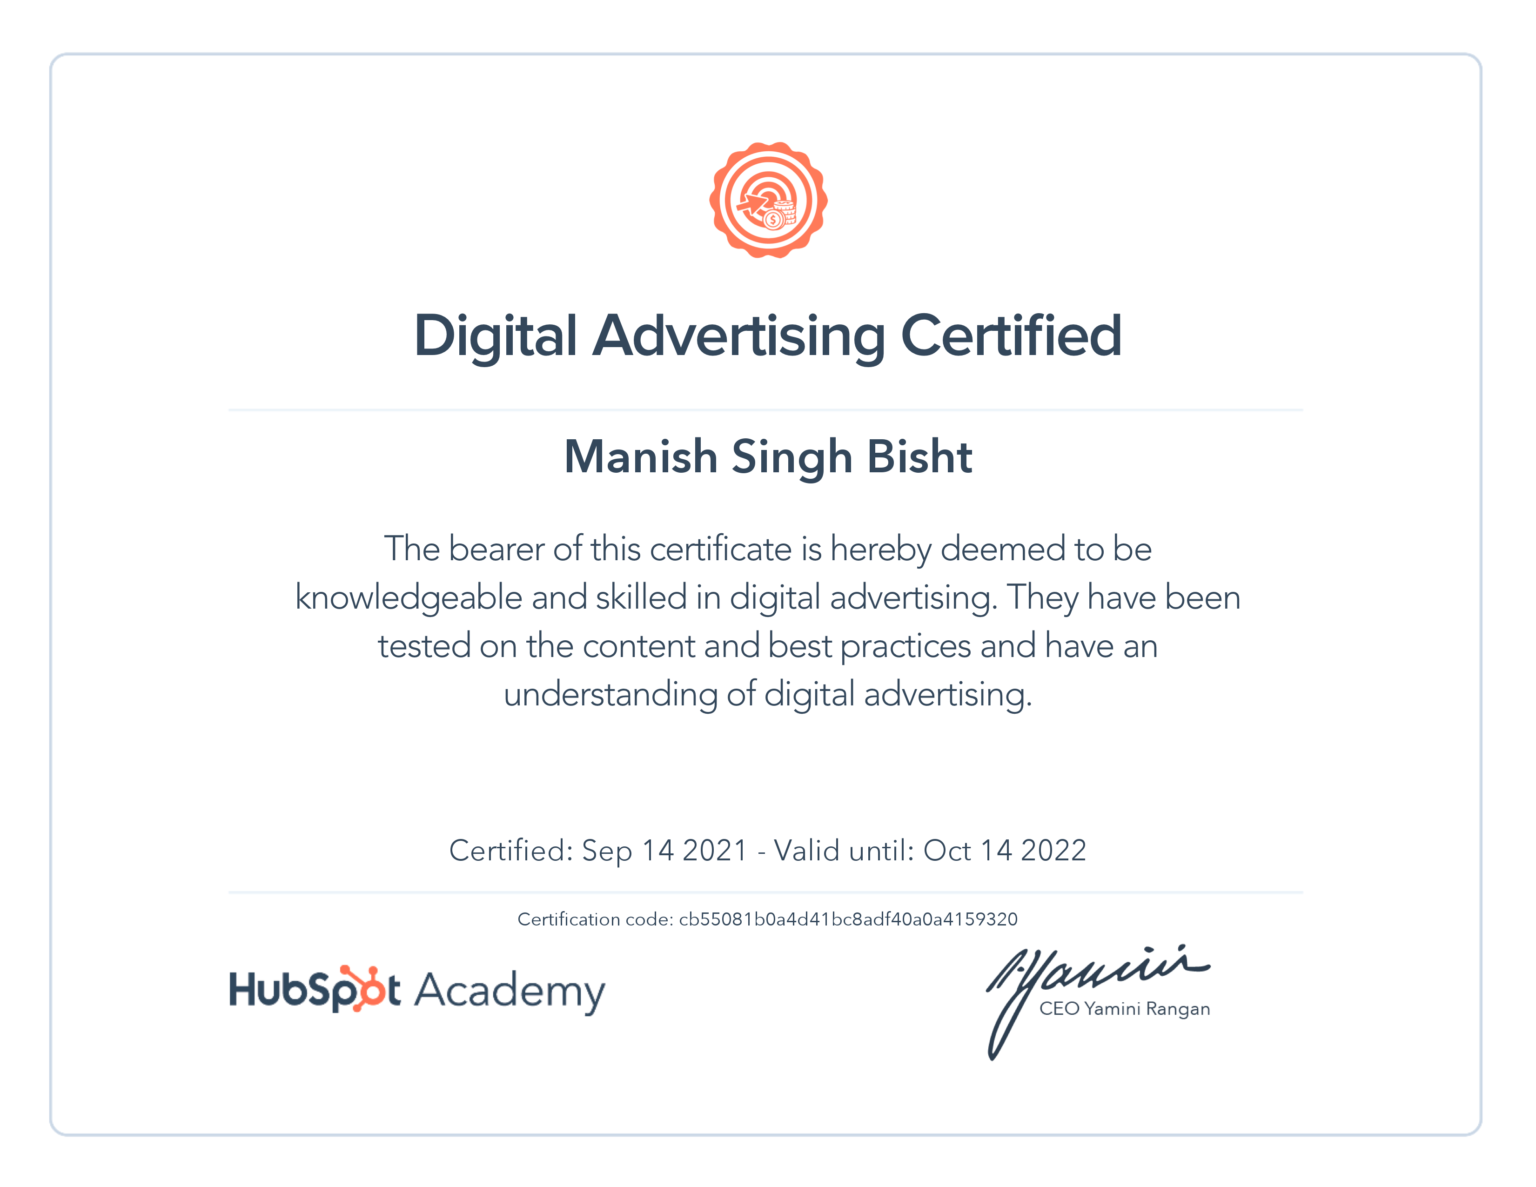 Digital Advertising Certificate